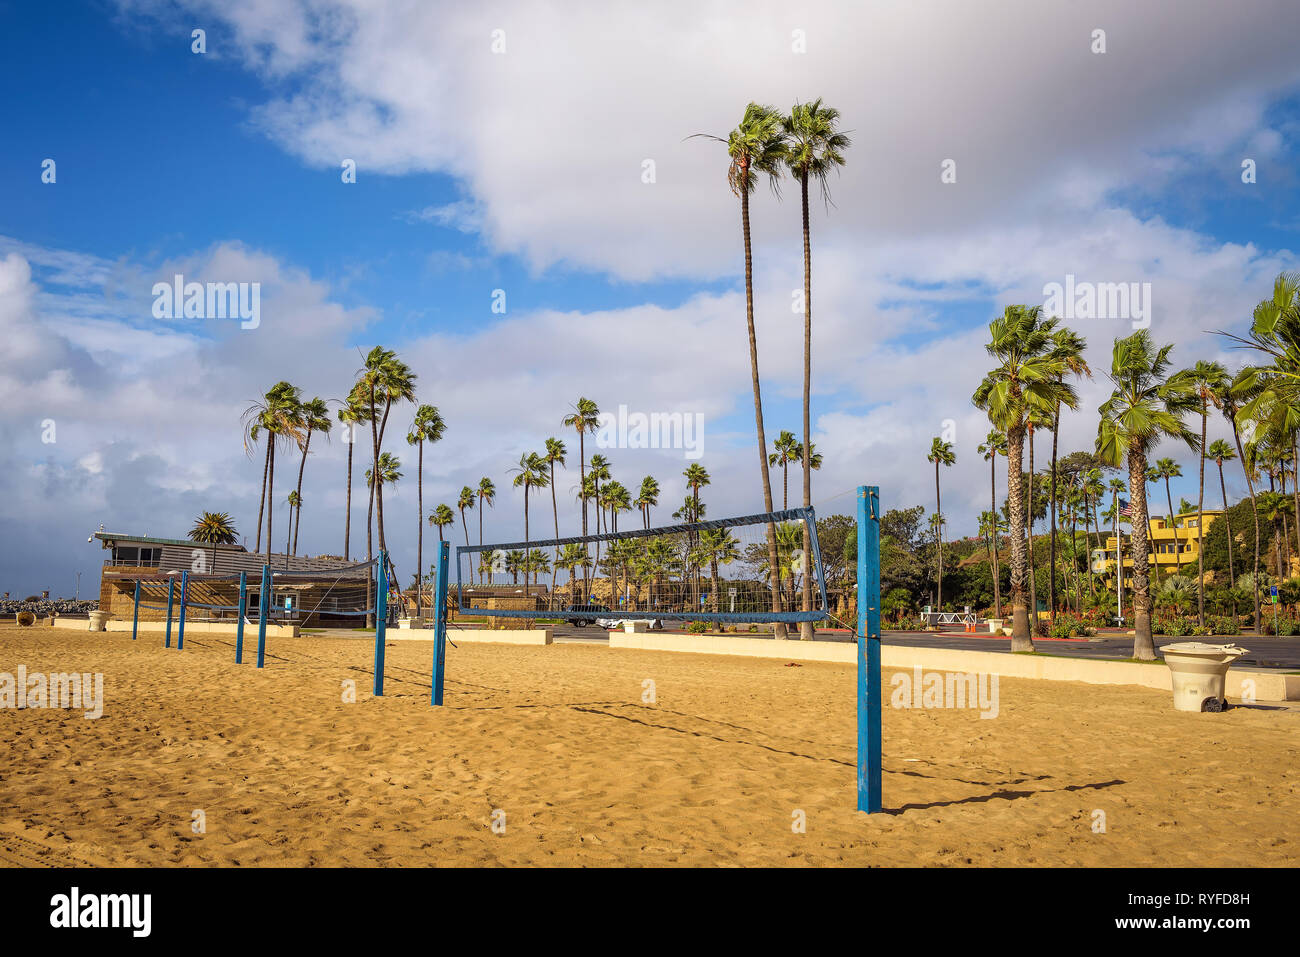 Filets de beach-volley sur la plage d'État Corona del Mar, près de Los Angeles Banque D'Images